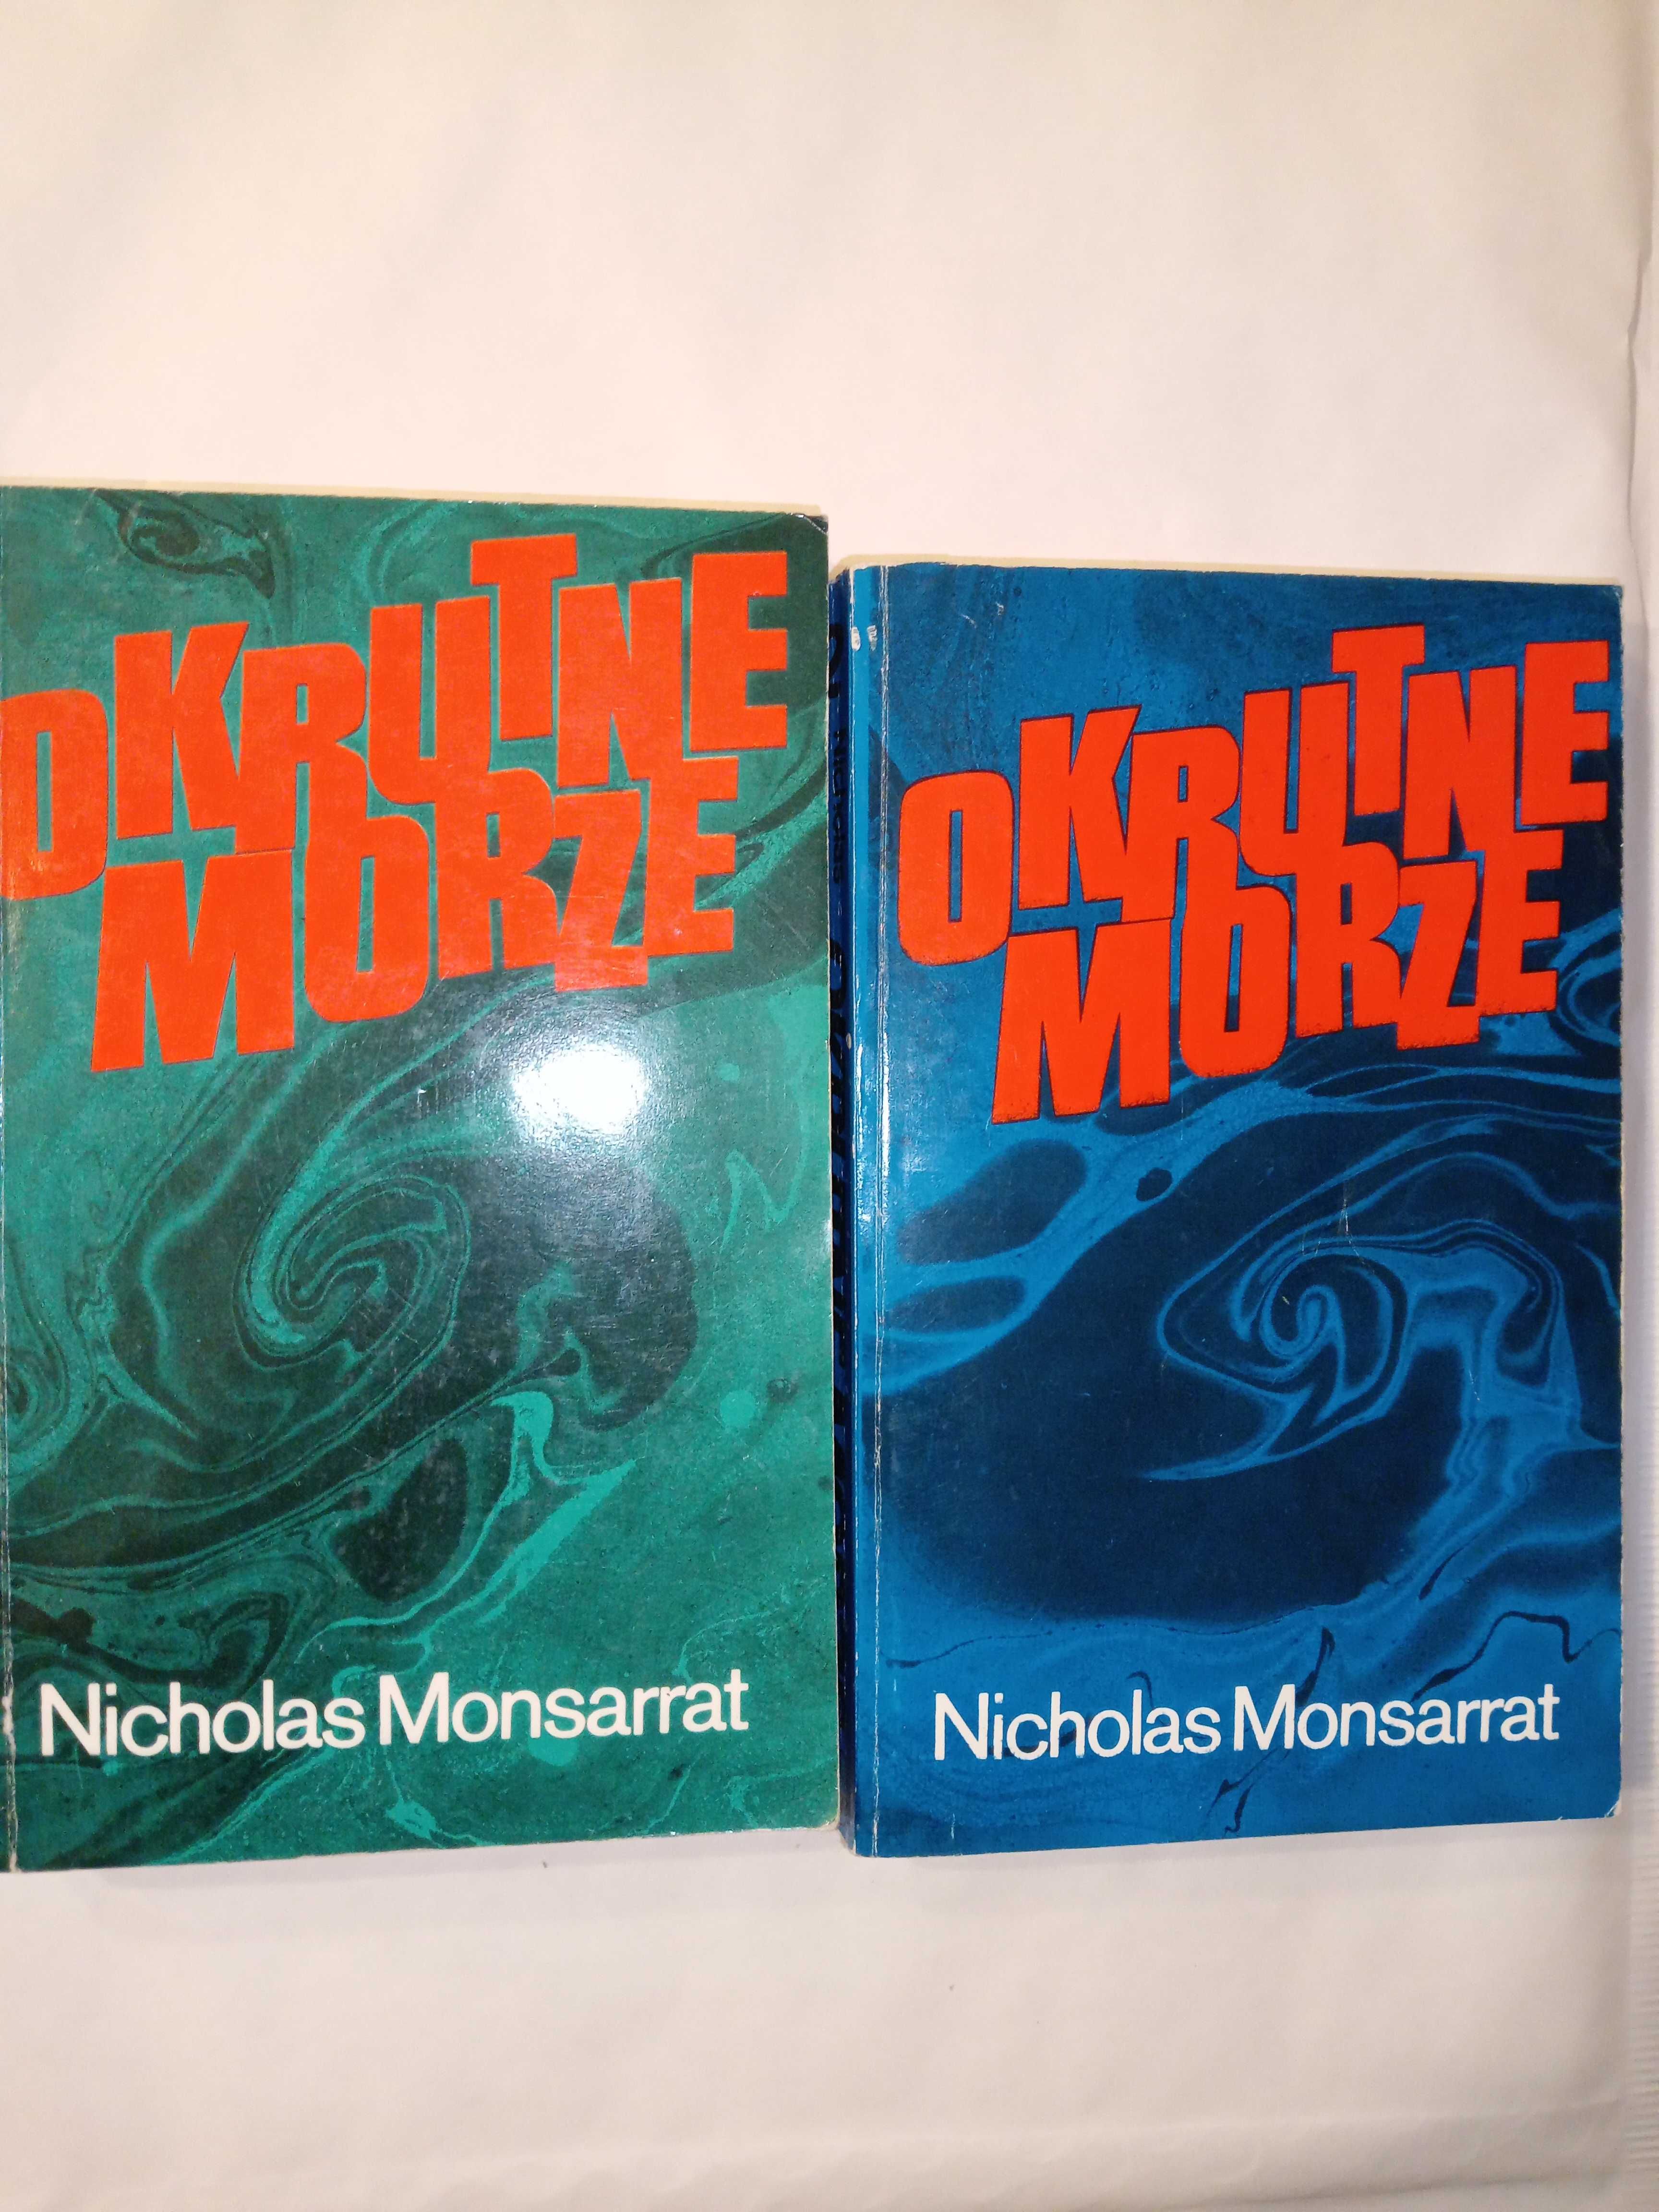 Okrutne morze - Nicholas Monsarrat 1988 tom 1 & 2